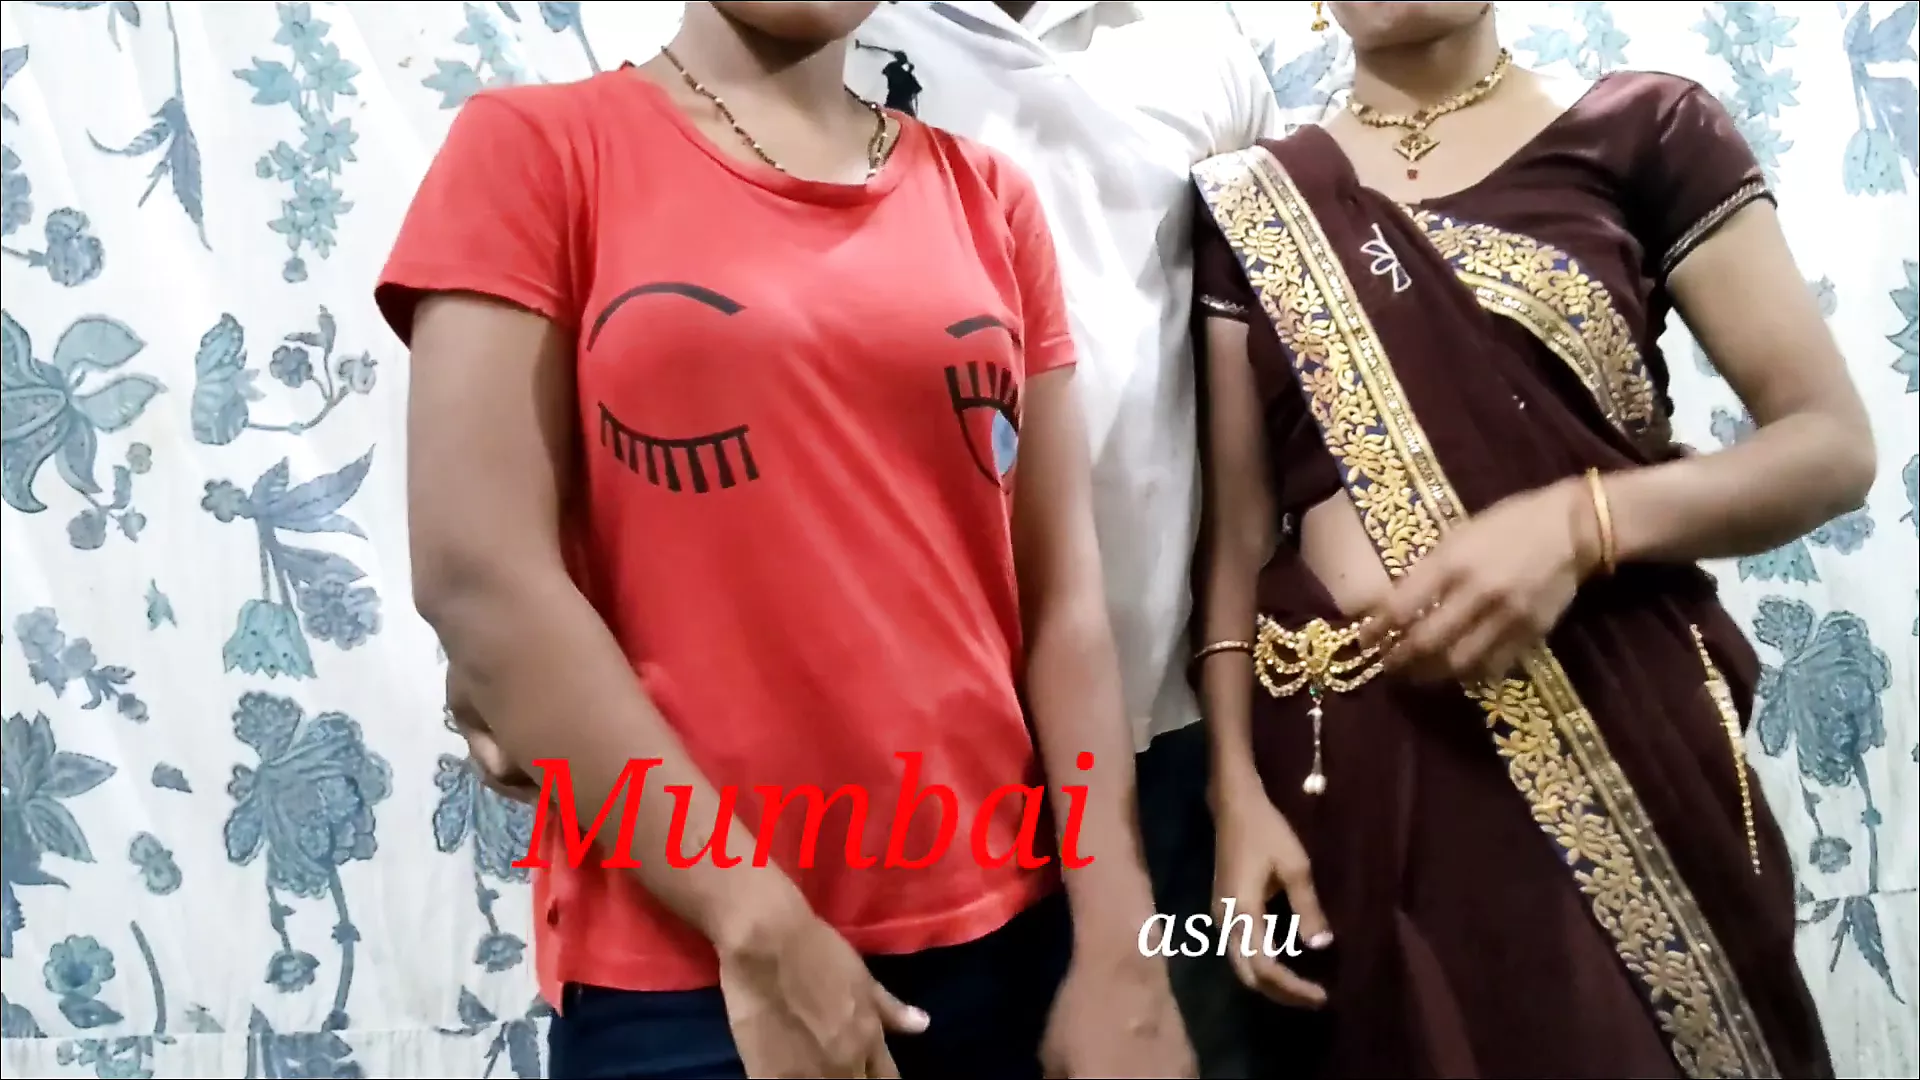 Indian threesome video, Mumbai Ashu sex video, anal